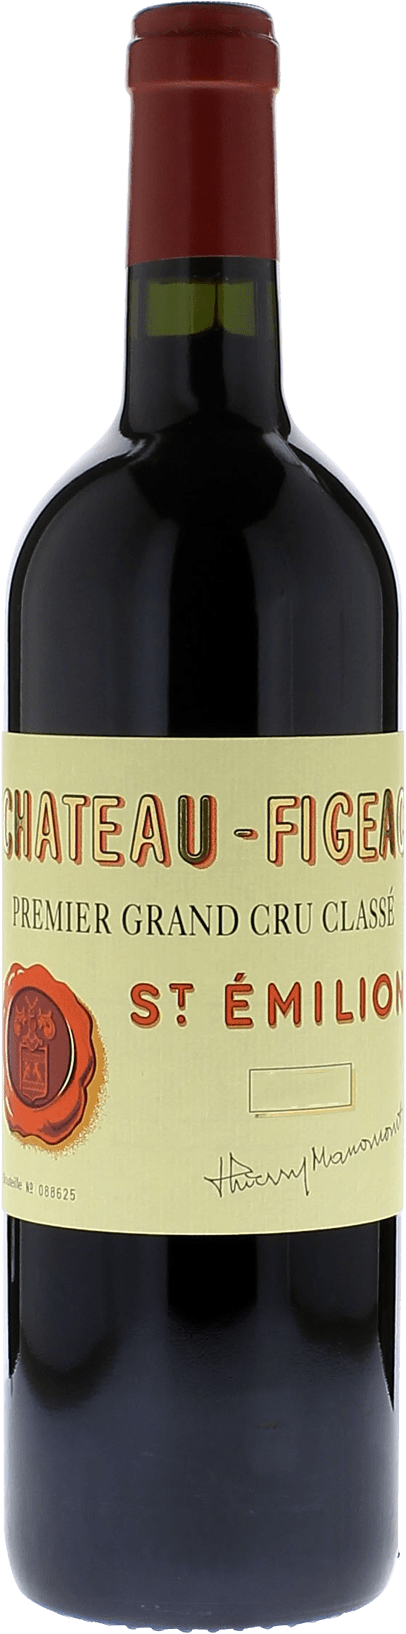 Figeac 1981 1er Grand cru B class Saint-Emilion, Bordeaux rouge